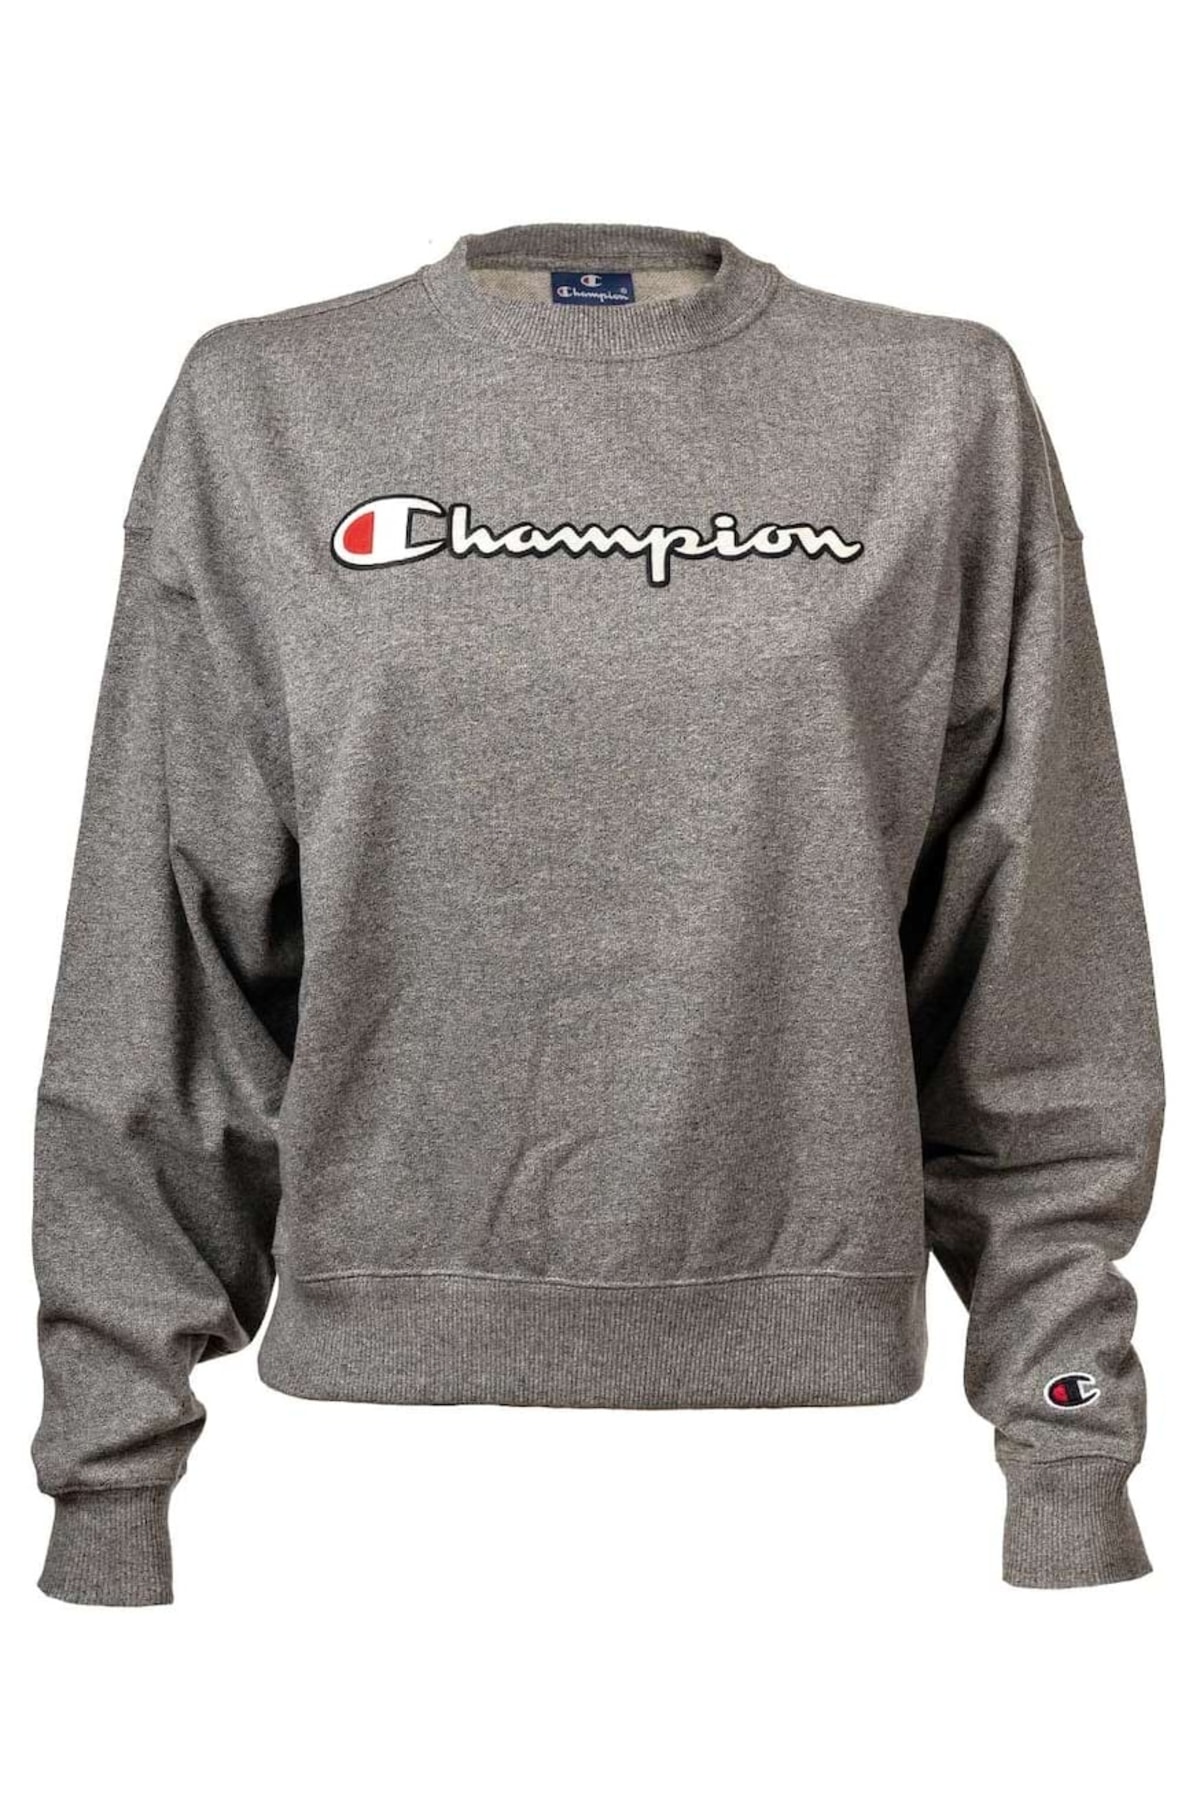 Champion Sweatshirt Grau Regular Fit Fast ausverkauft